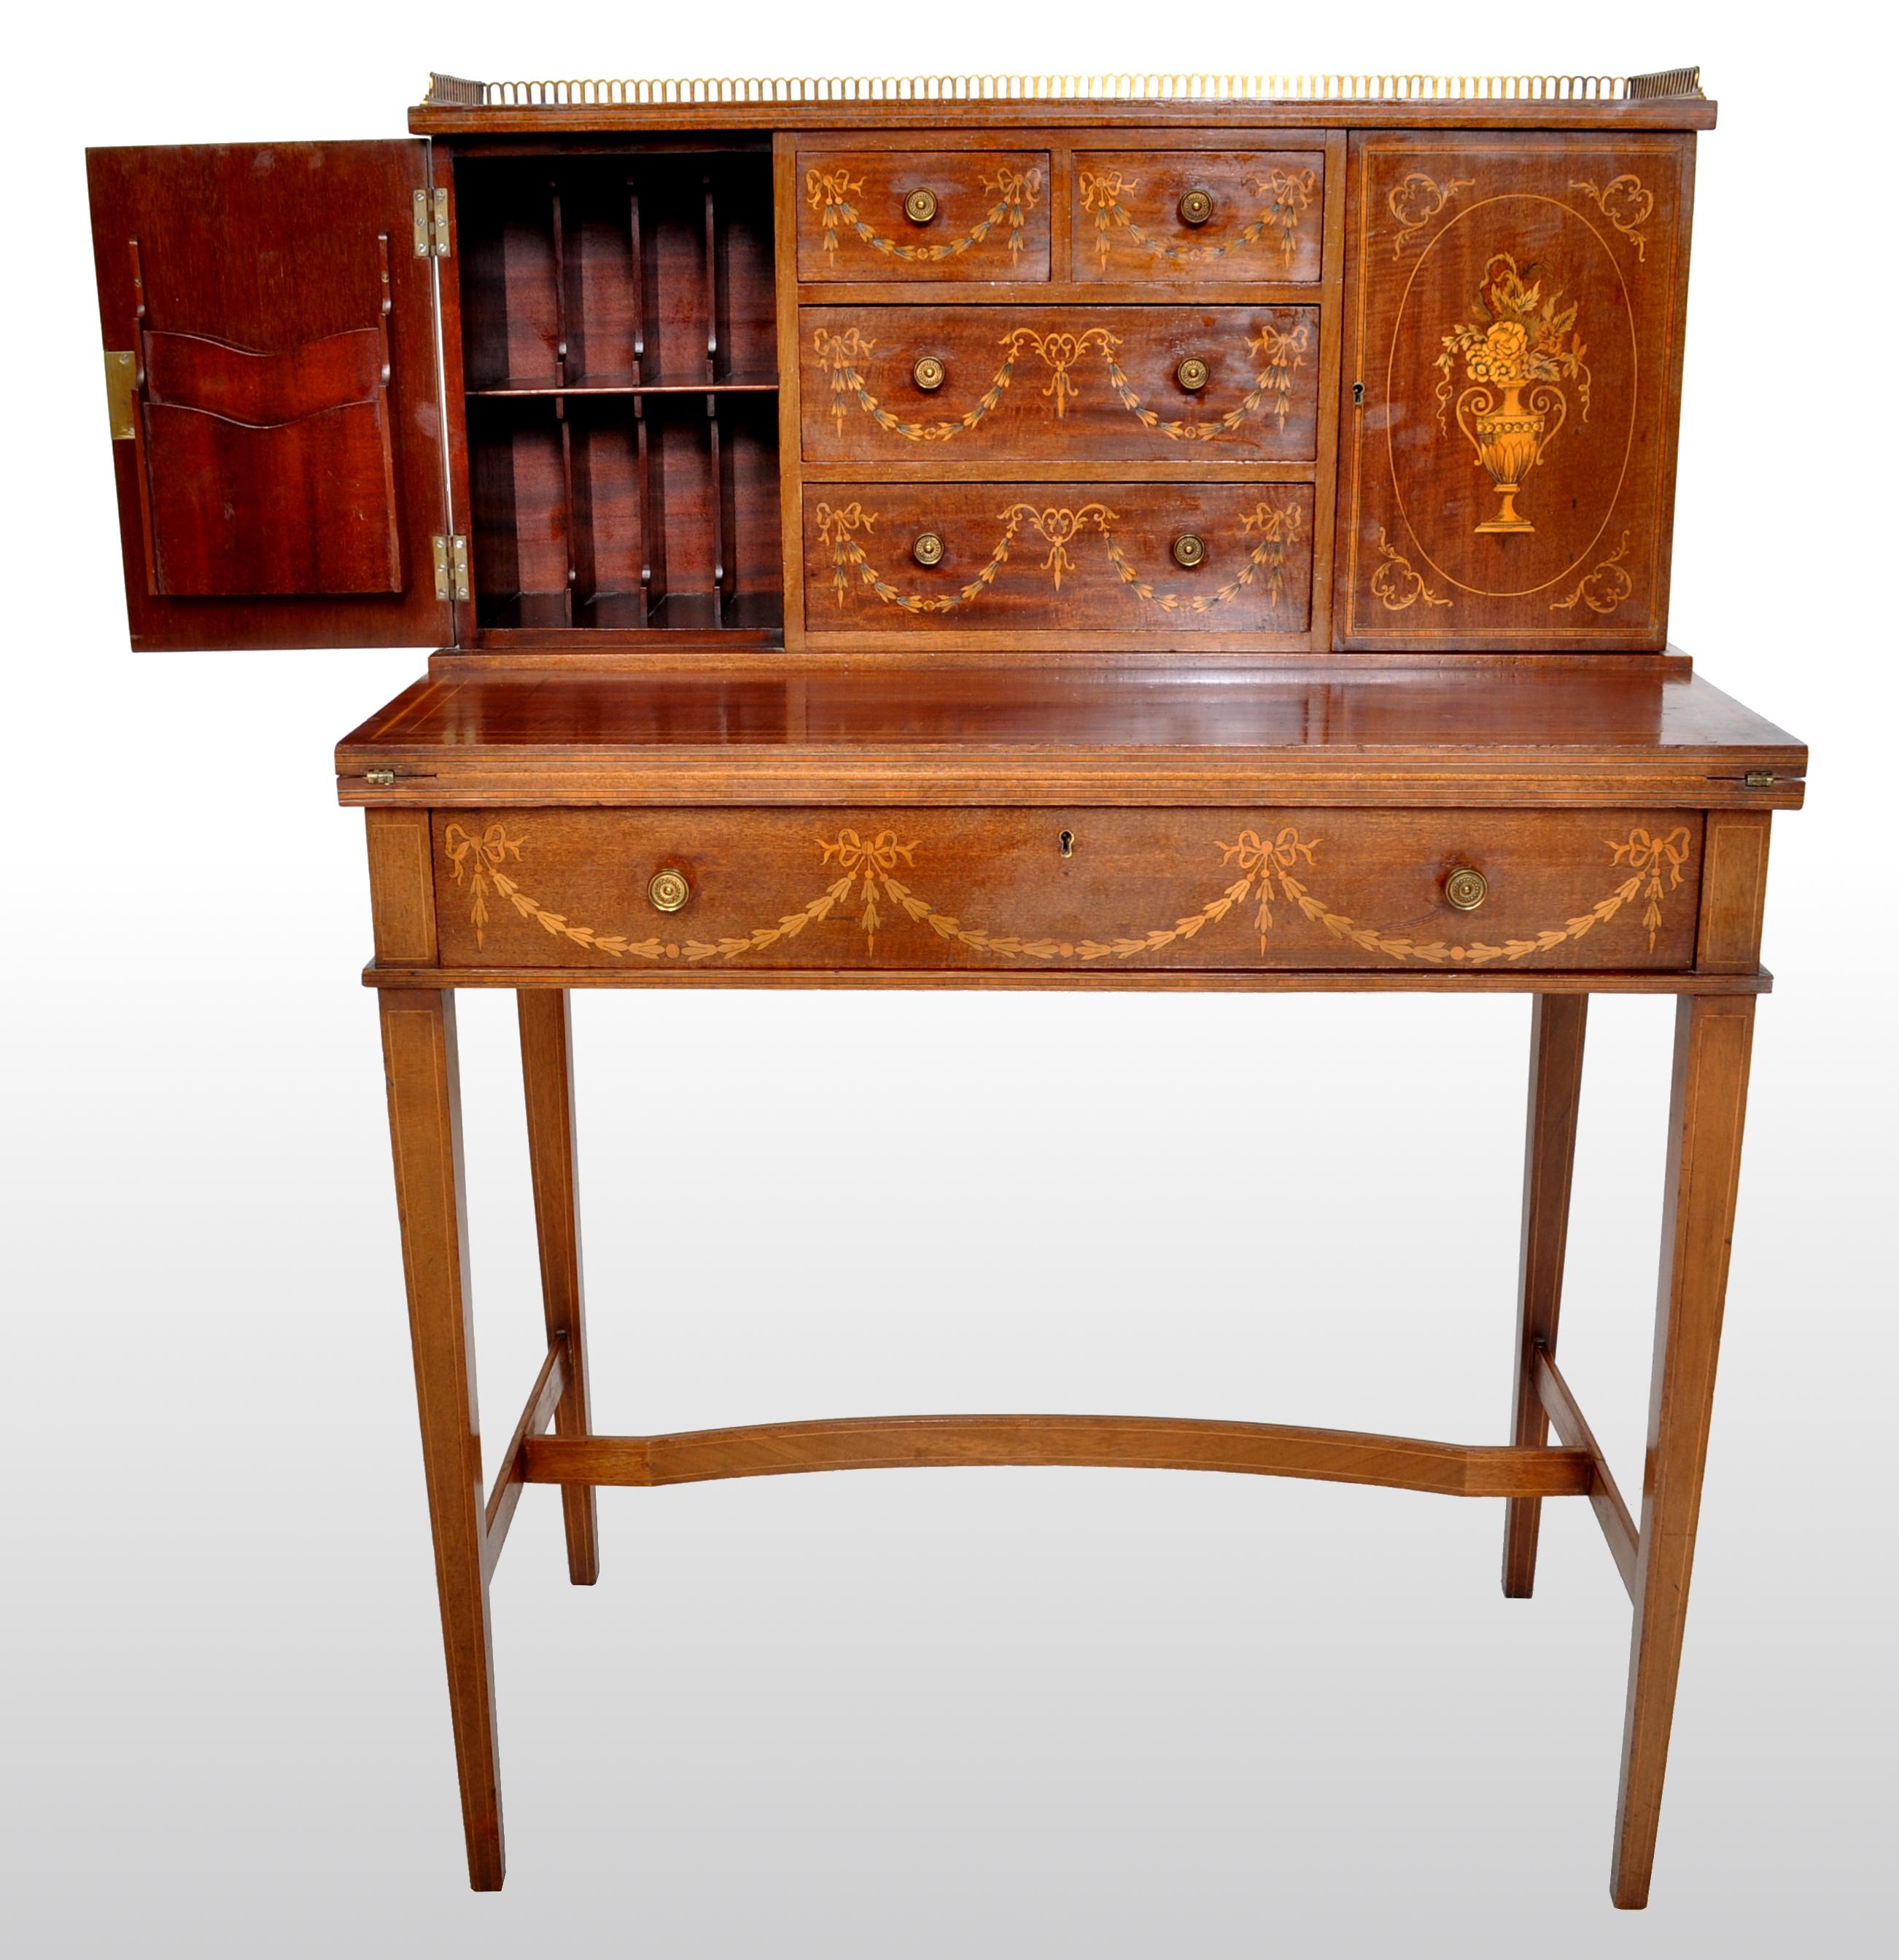 Inlay Antique Sheraton Revival Inlaid Mahogany Desk / Writing Table, circa 1895